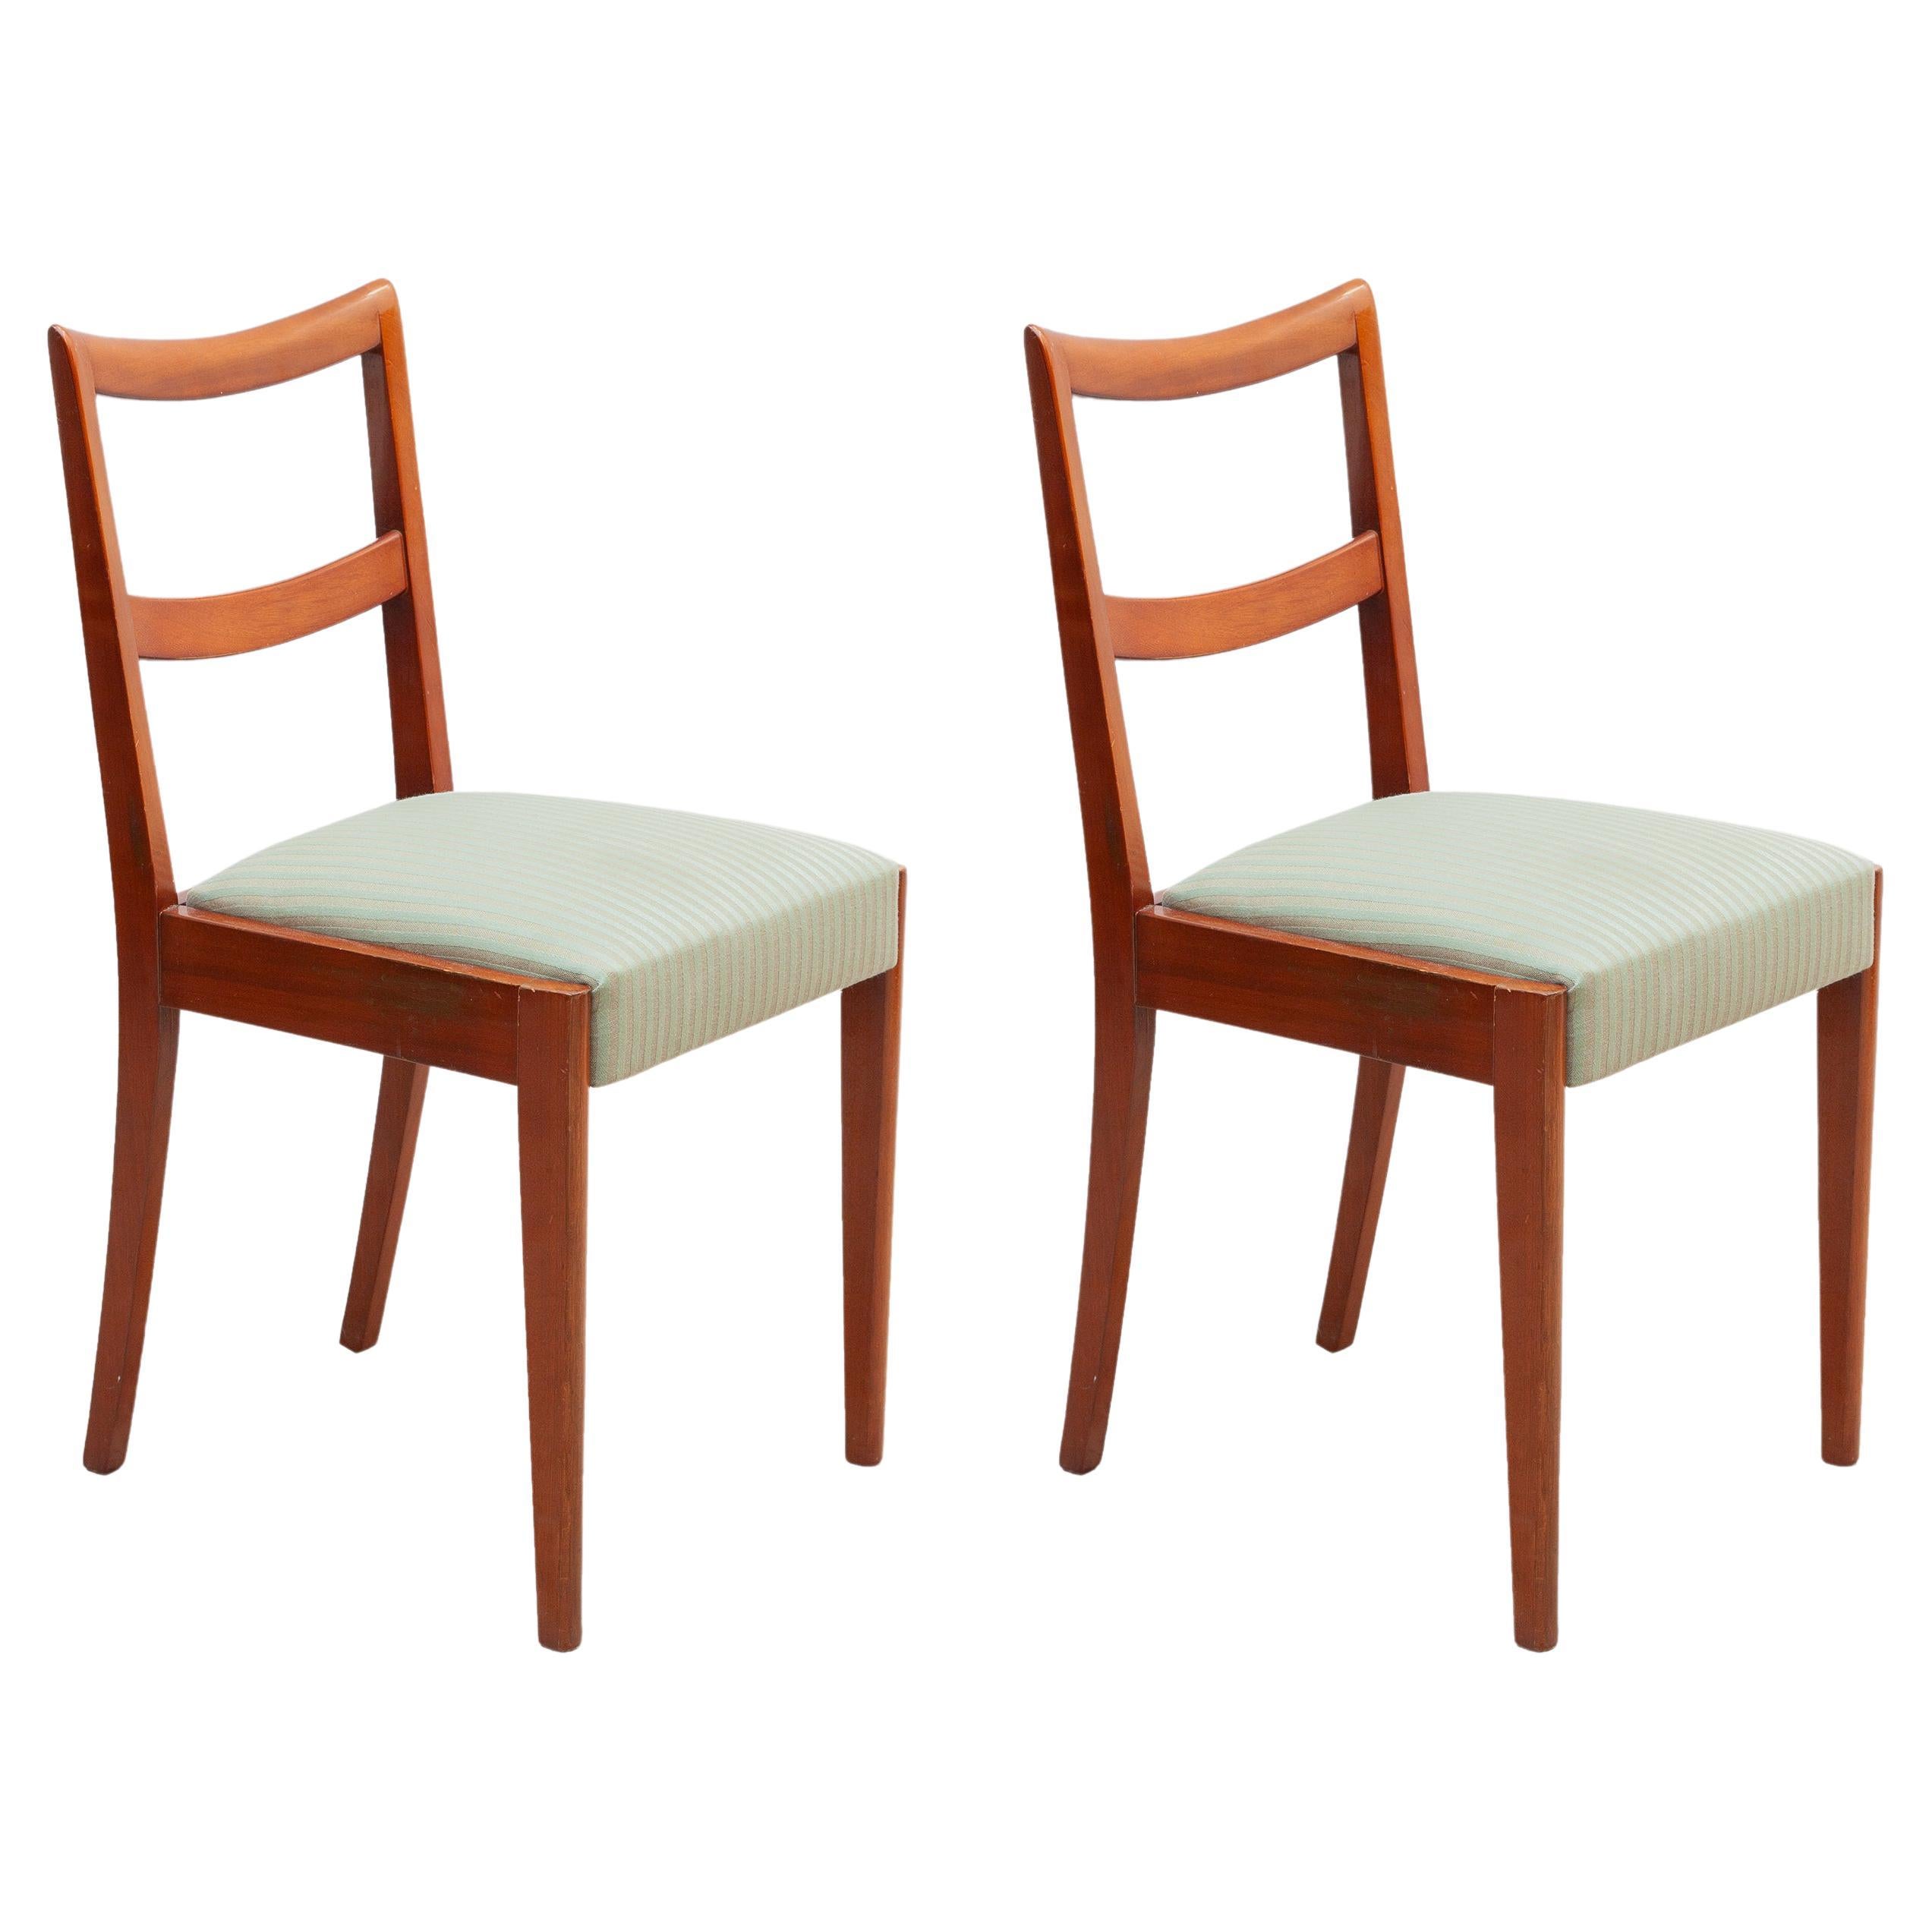 Set of Two De Coene Side chairs, 1930s